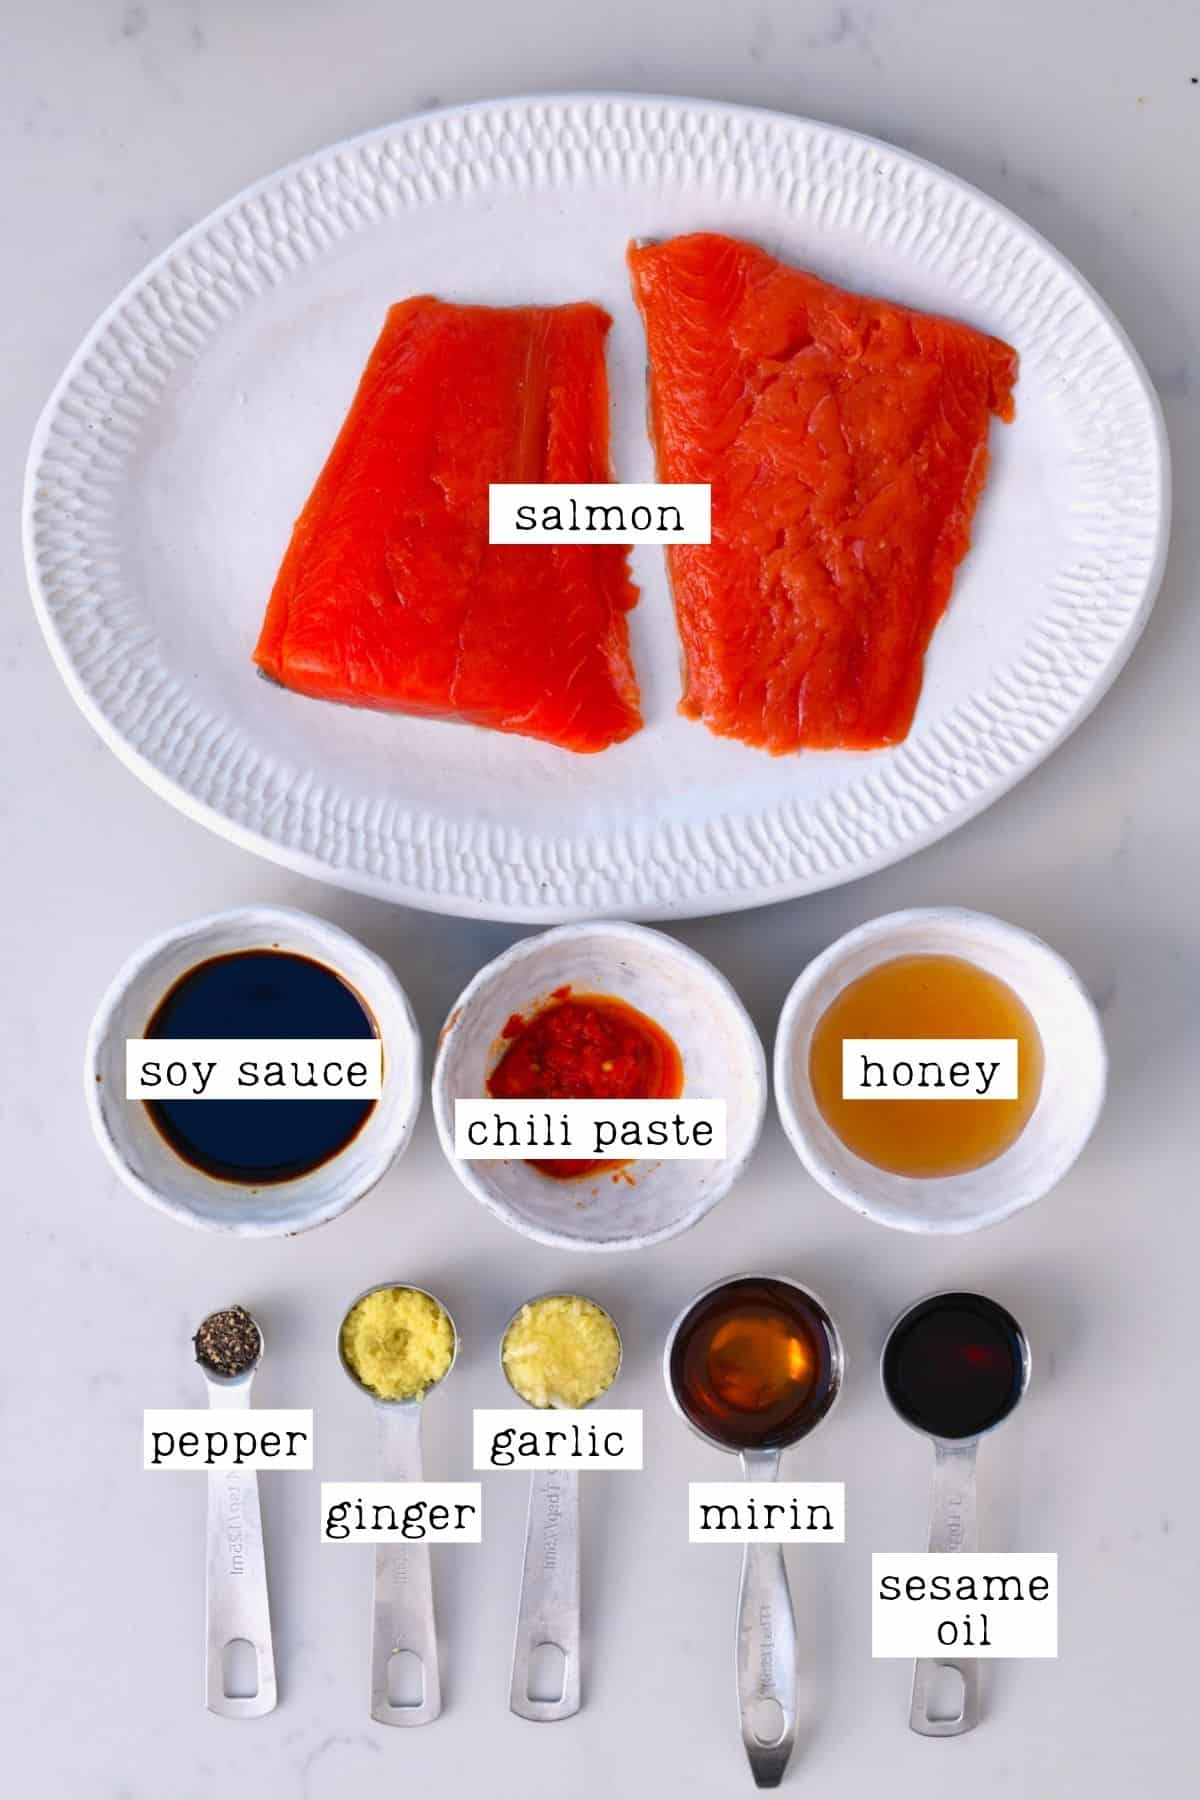 Ingredients for teriyaki salmon